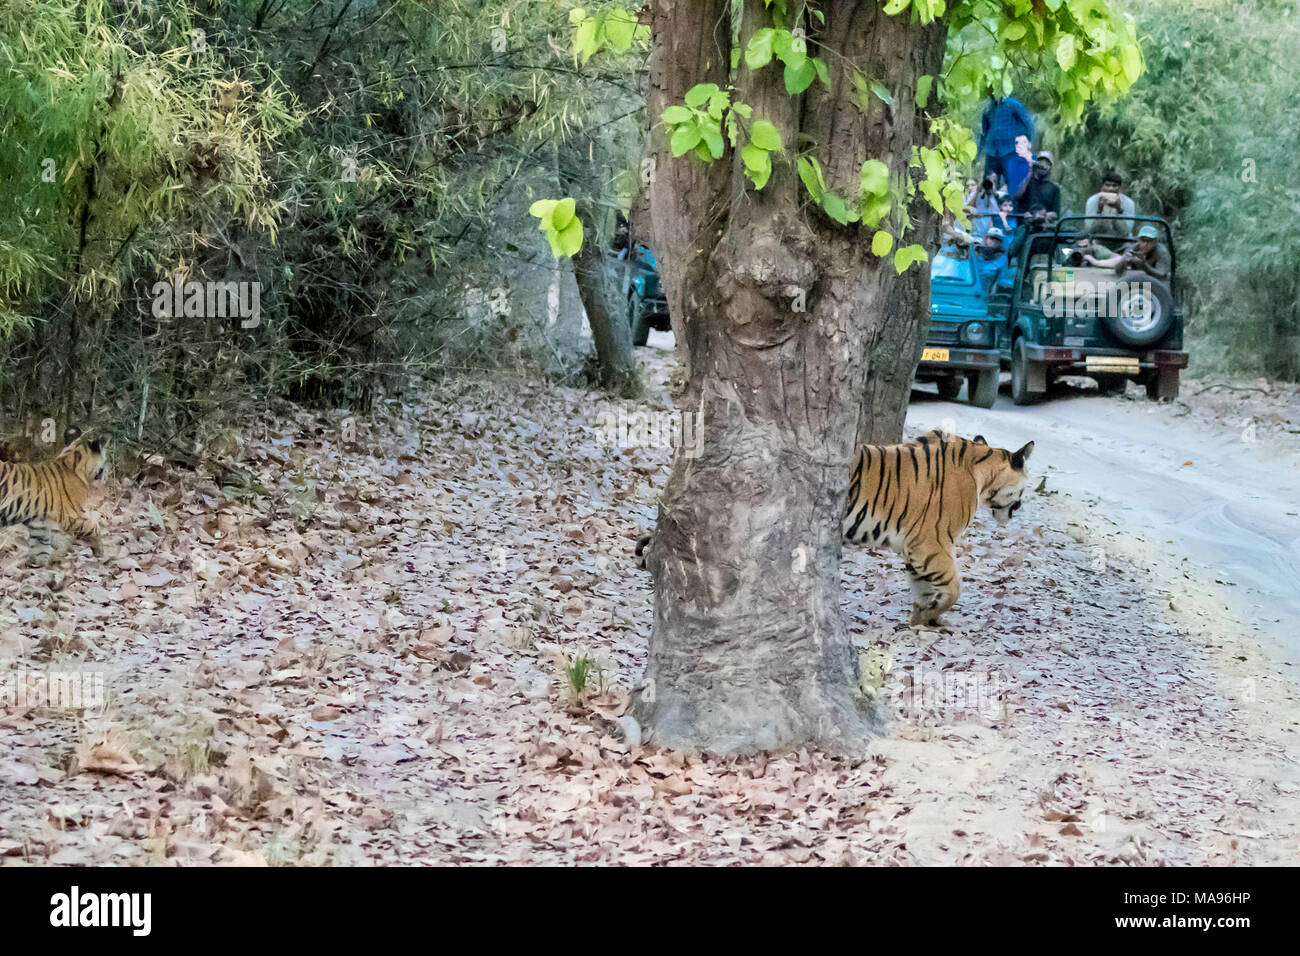 Little two month old wild Bengal Tiger Cubs, Panthera tigris tigris, walking towards a road with tourist vehicles, Bandhavgarh Tiger Reserve, India Stock Photo